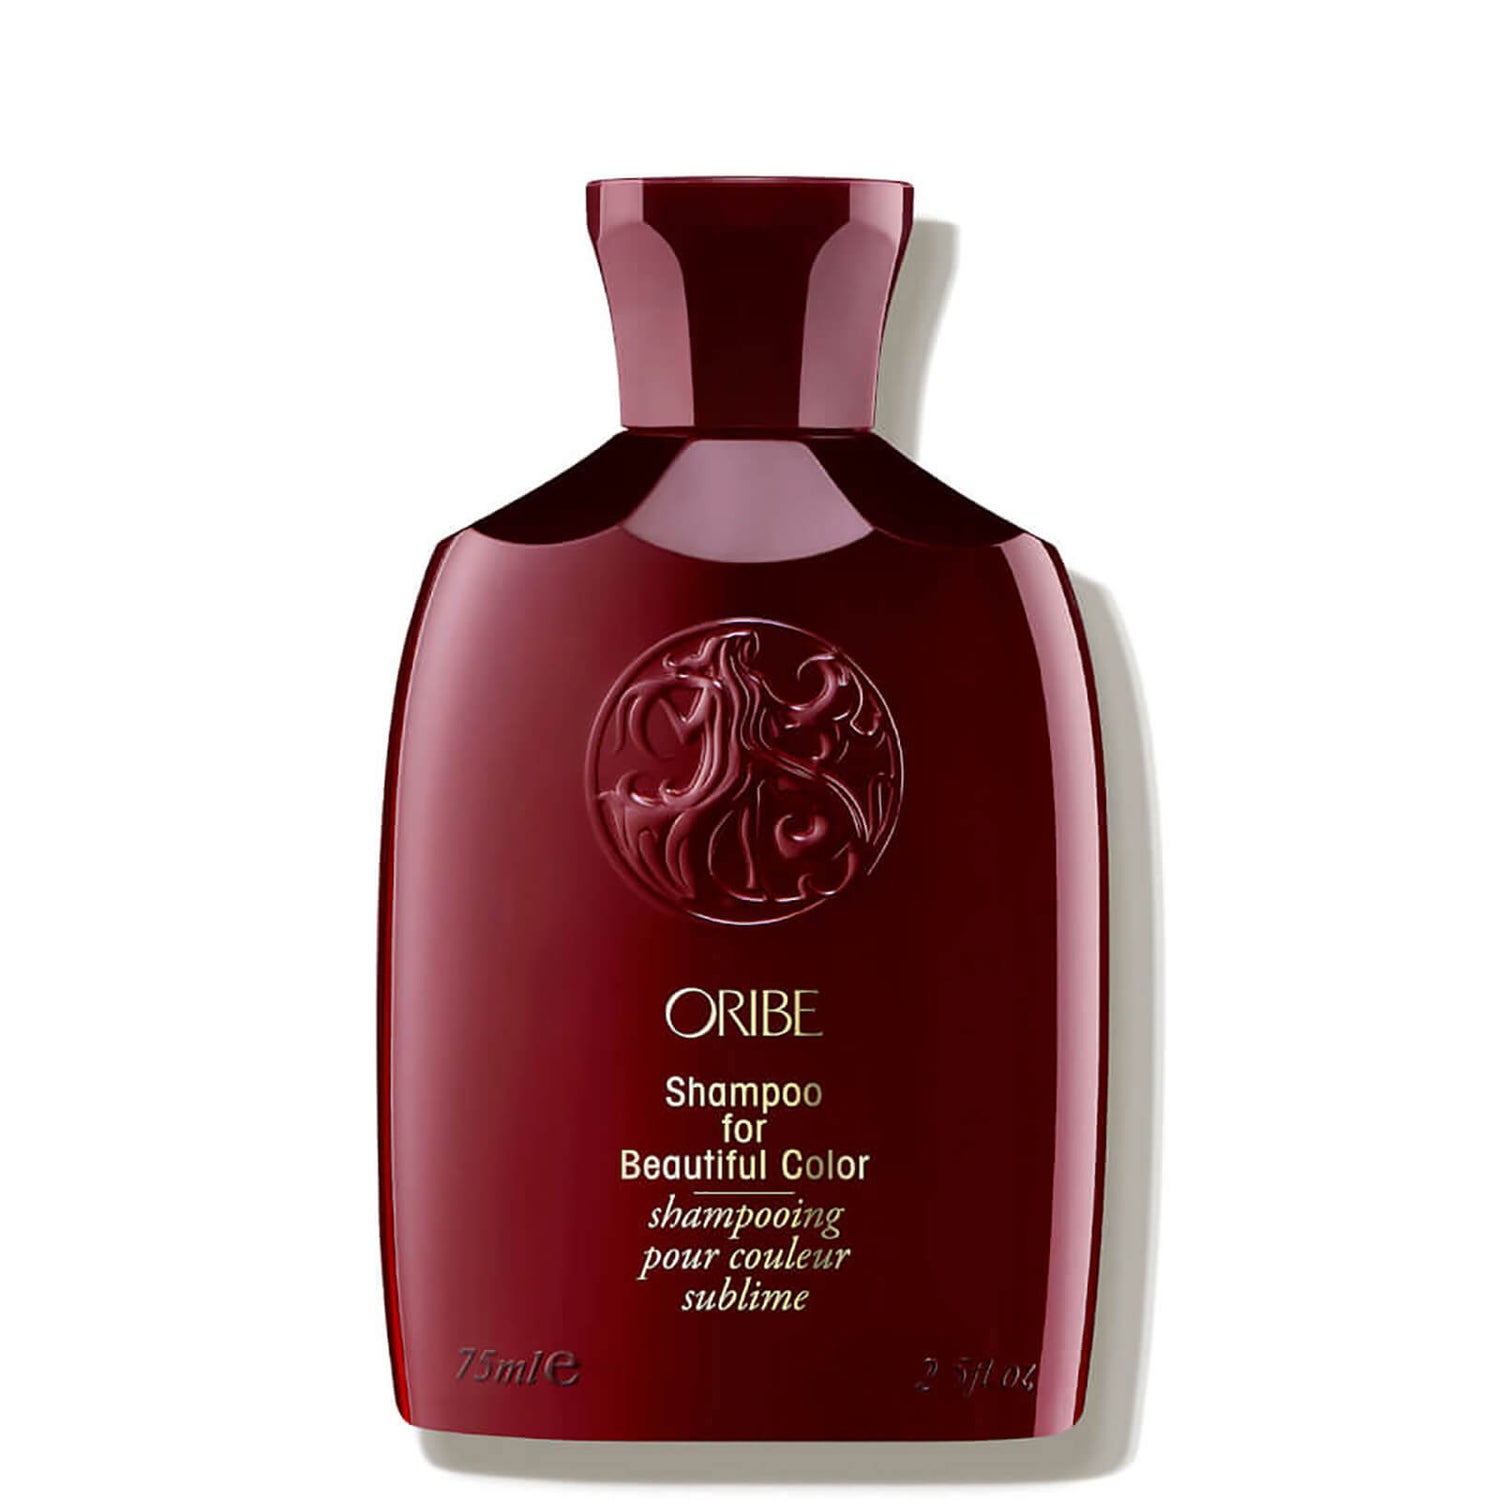 Oribe Shampoo for Beautiful Color - Travel 2.53 fl. oz.